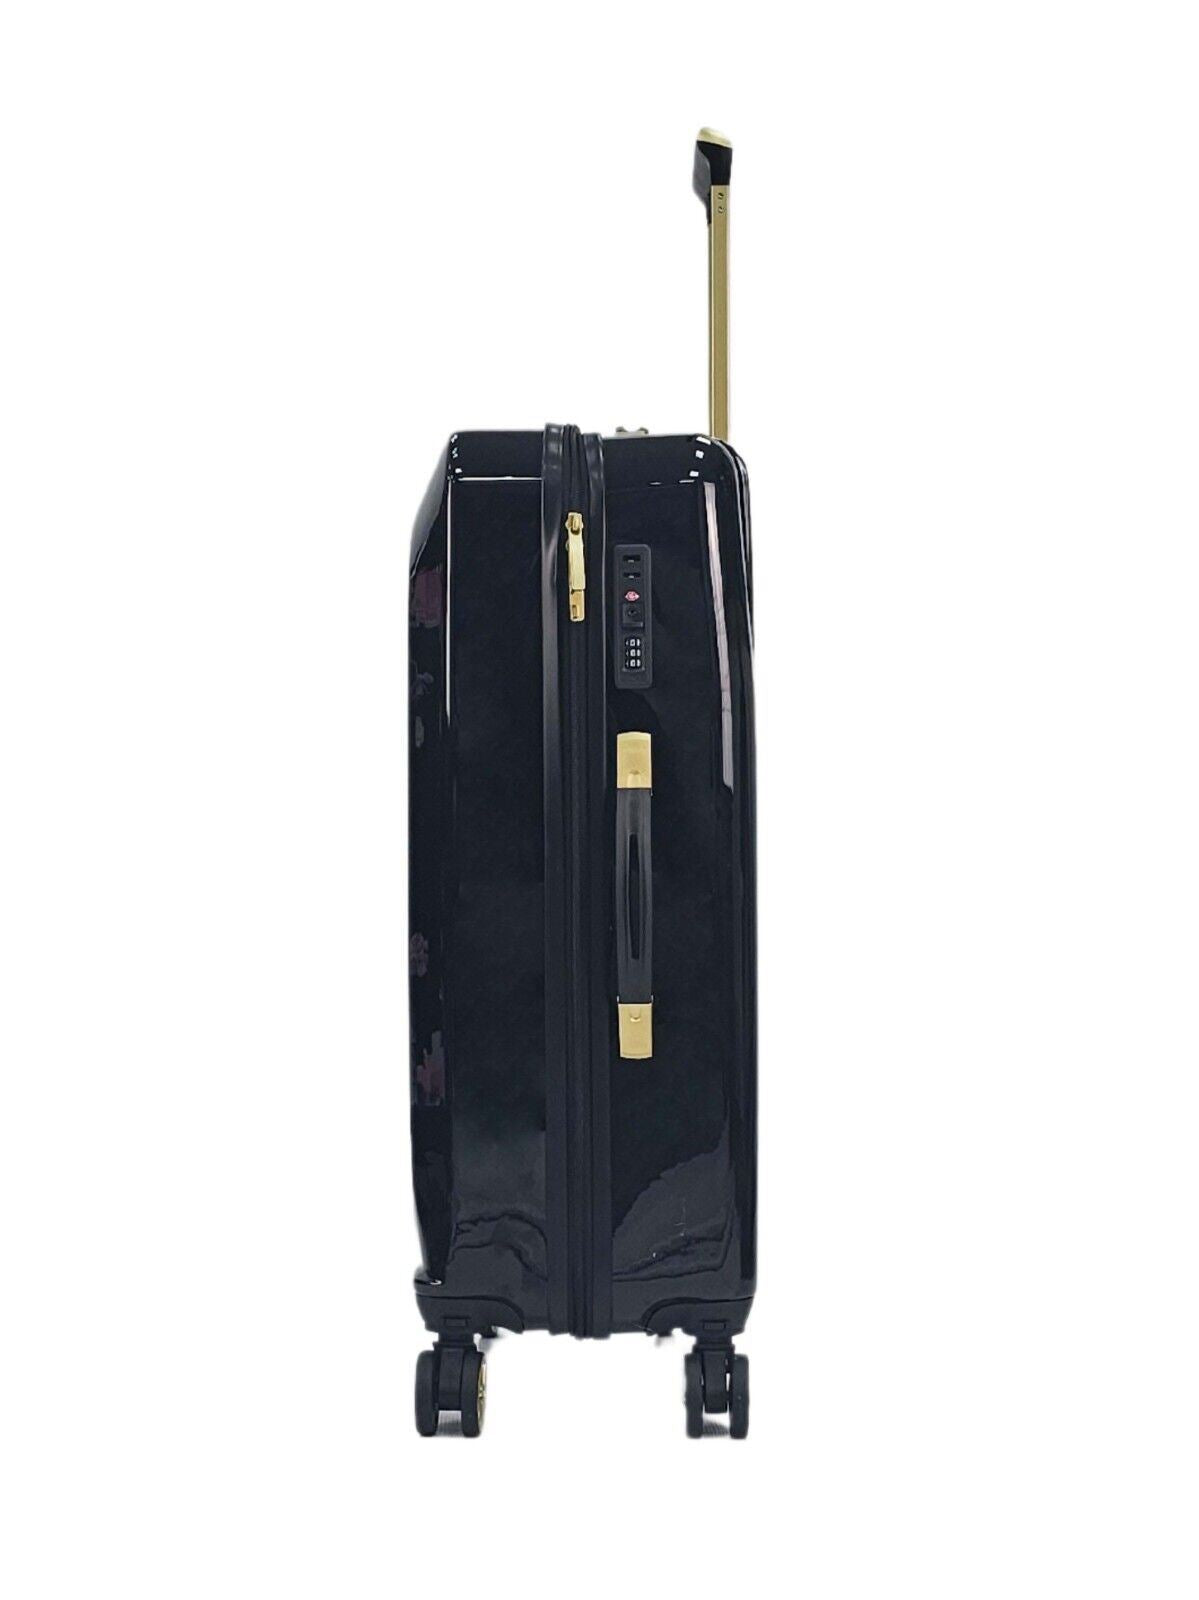 Butler Medium Hard Shell Suitcase in Black